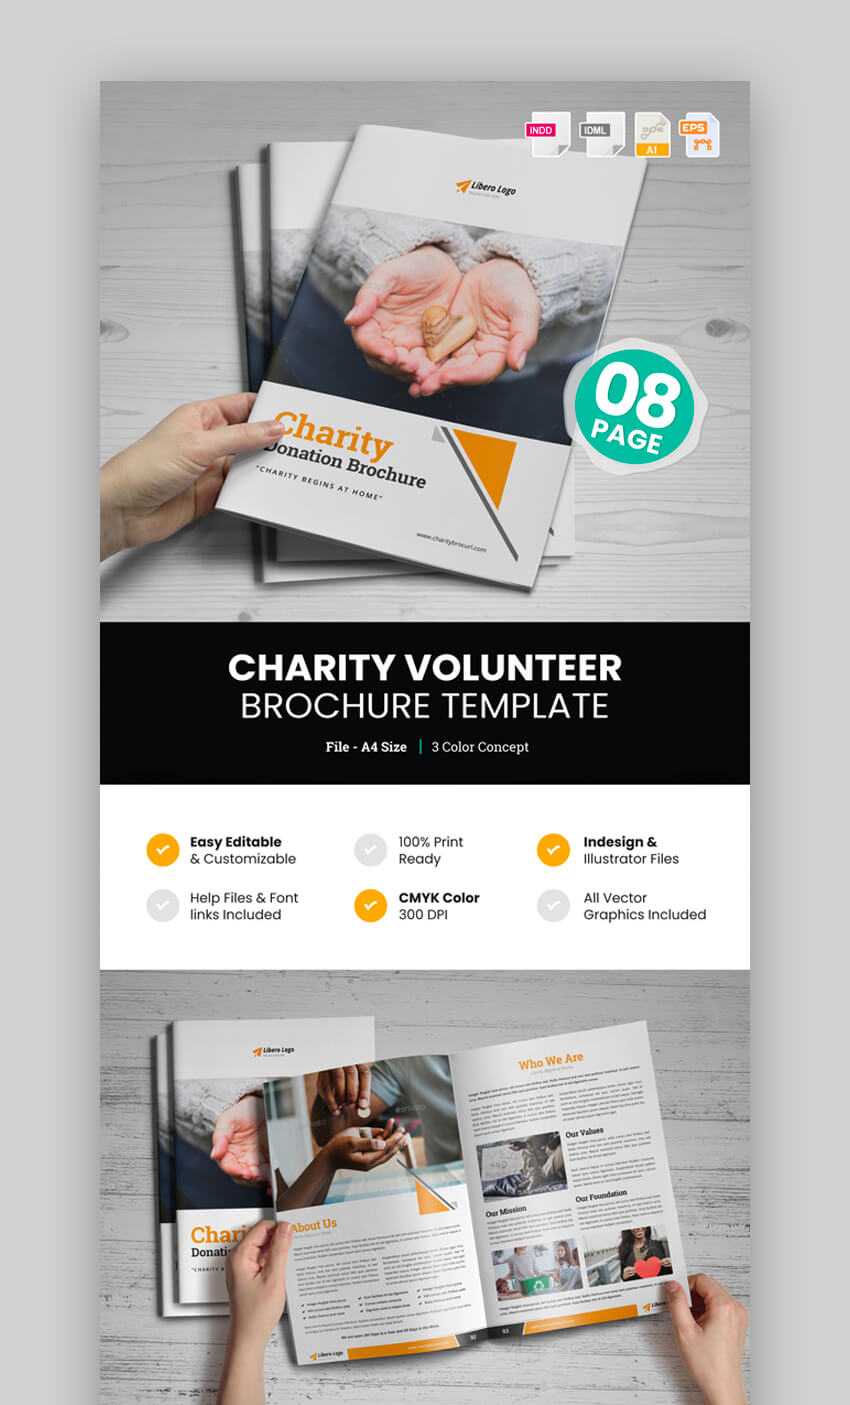 20 Best Professional Business Brochure Design Templates For 2019 For Volunteer Brochure Template